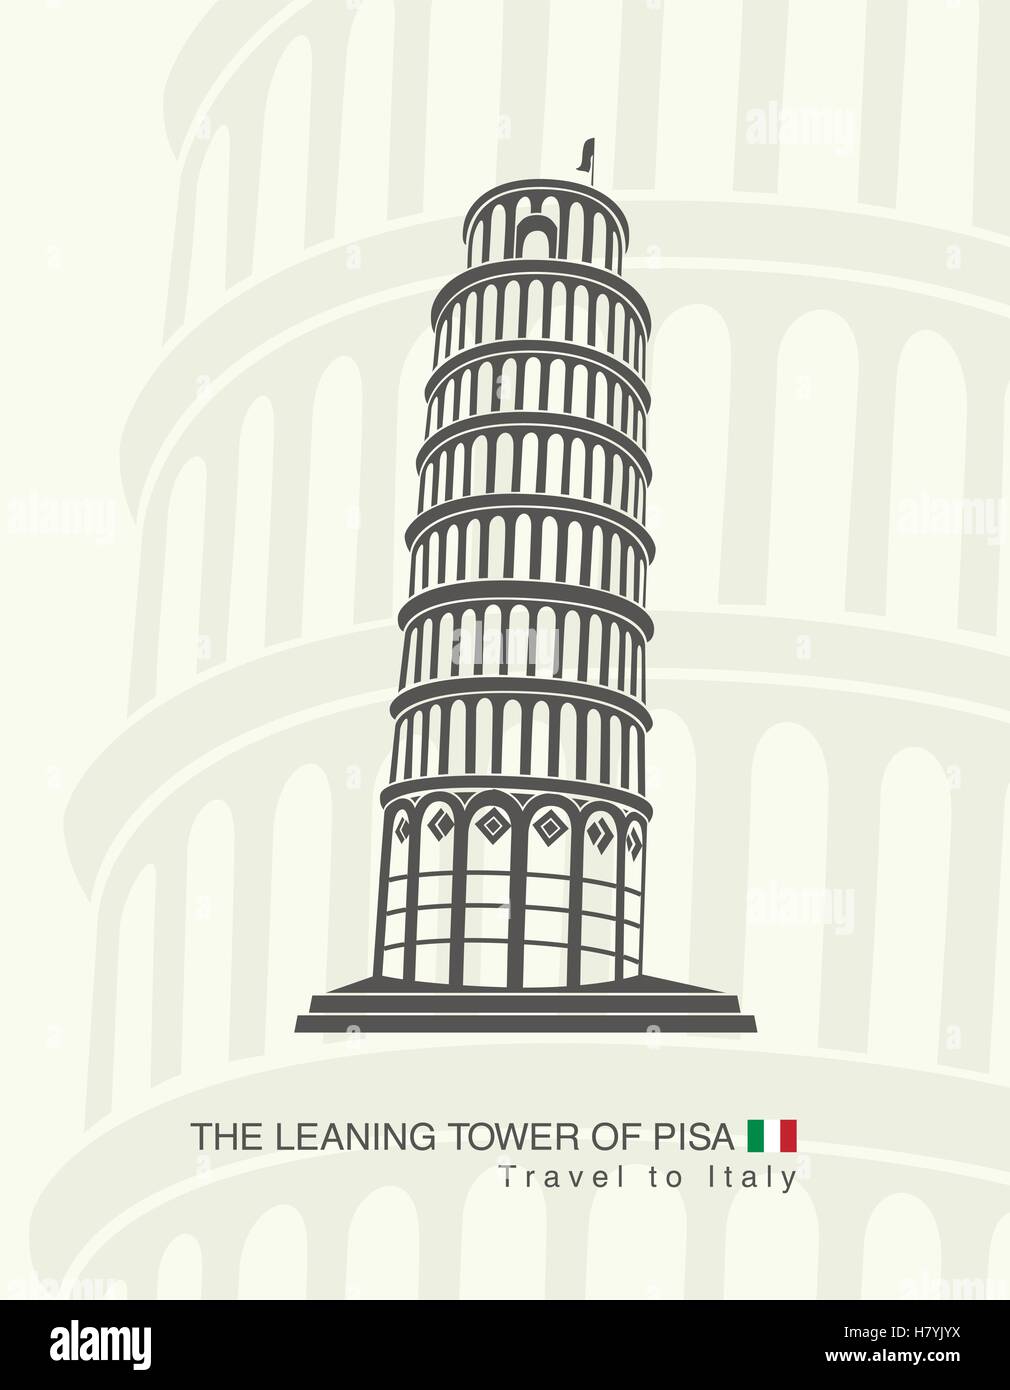 Abbildung schiefe Turm von Pisa in Italien Stock Vektor